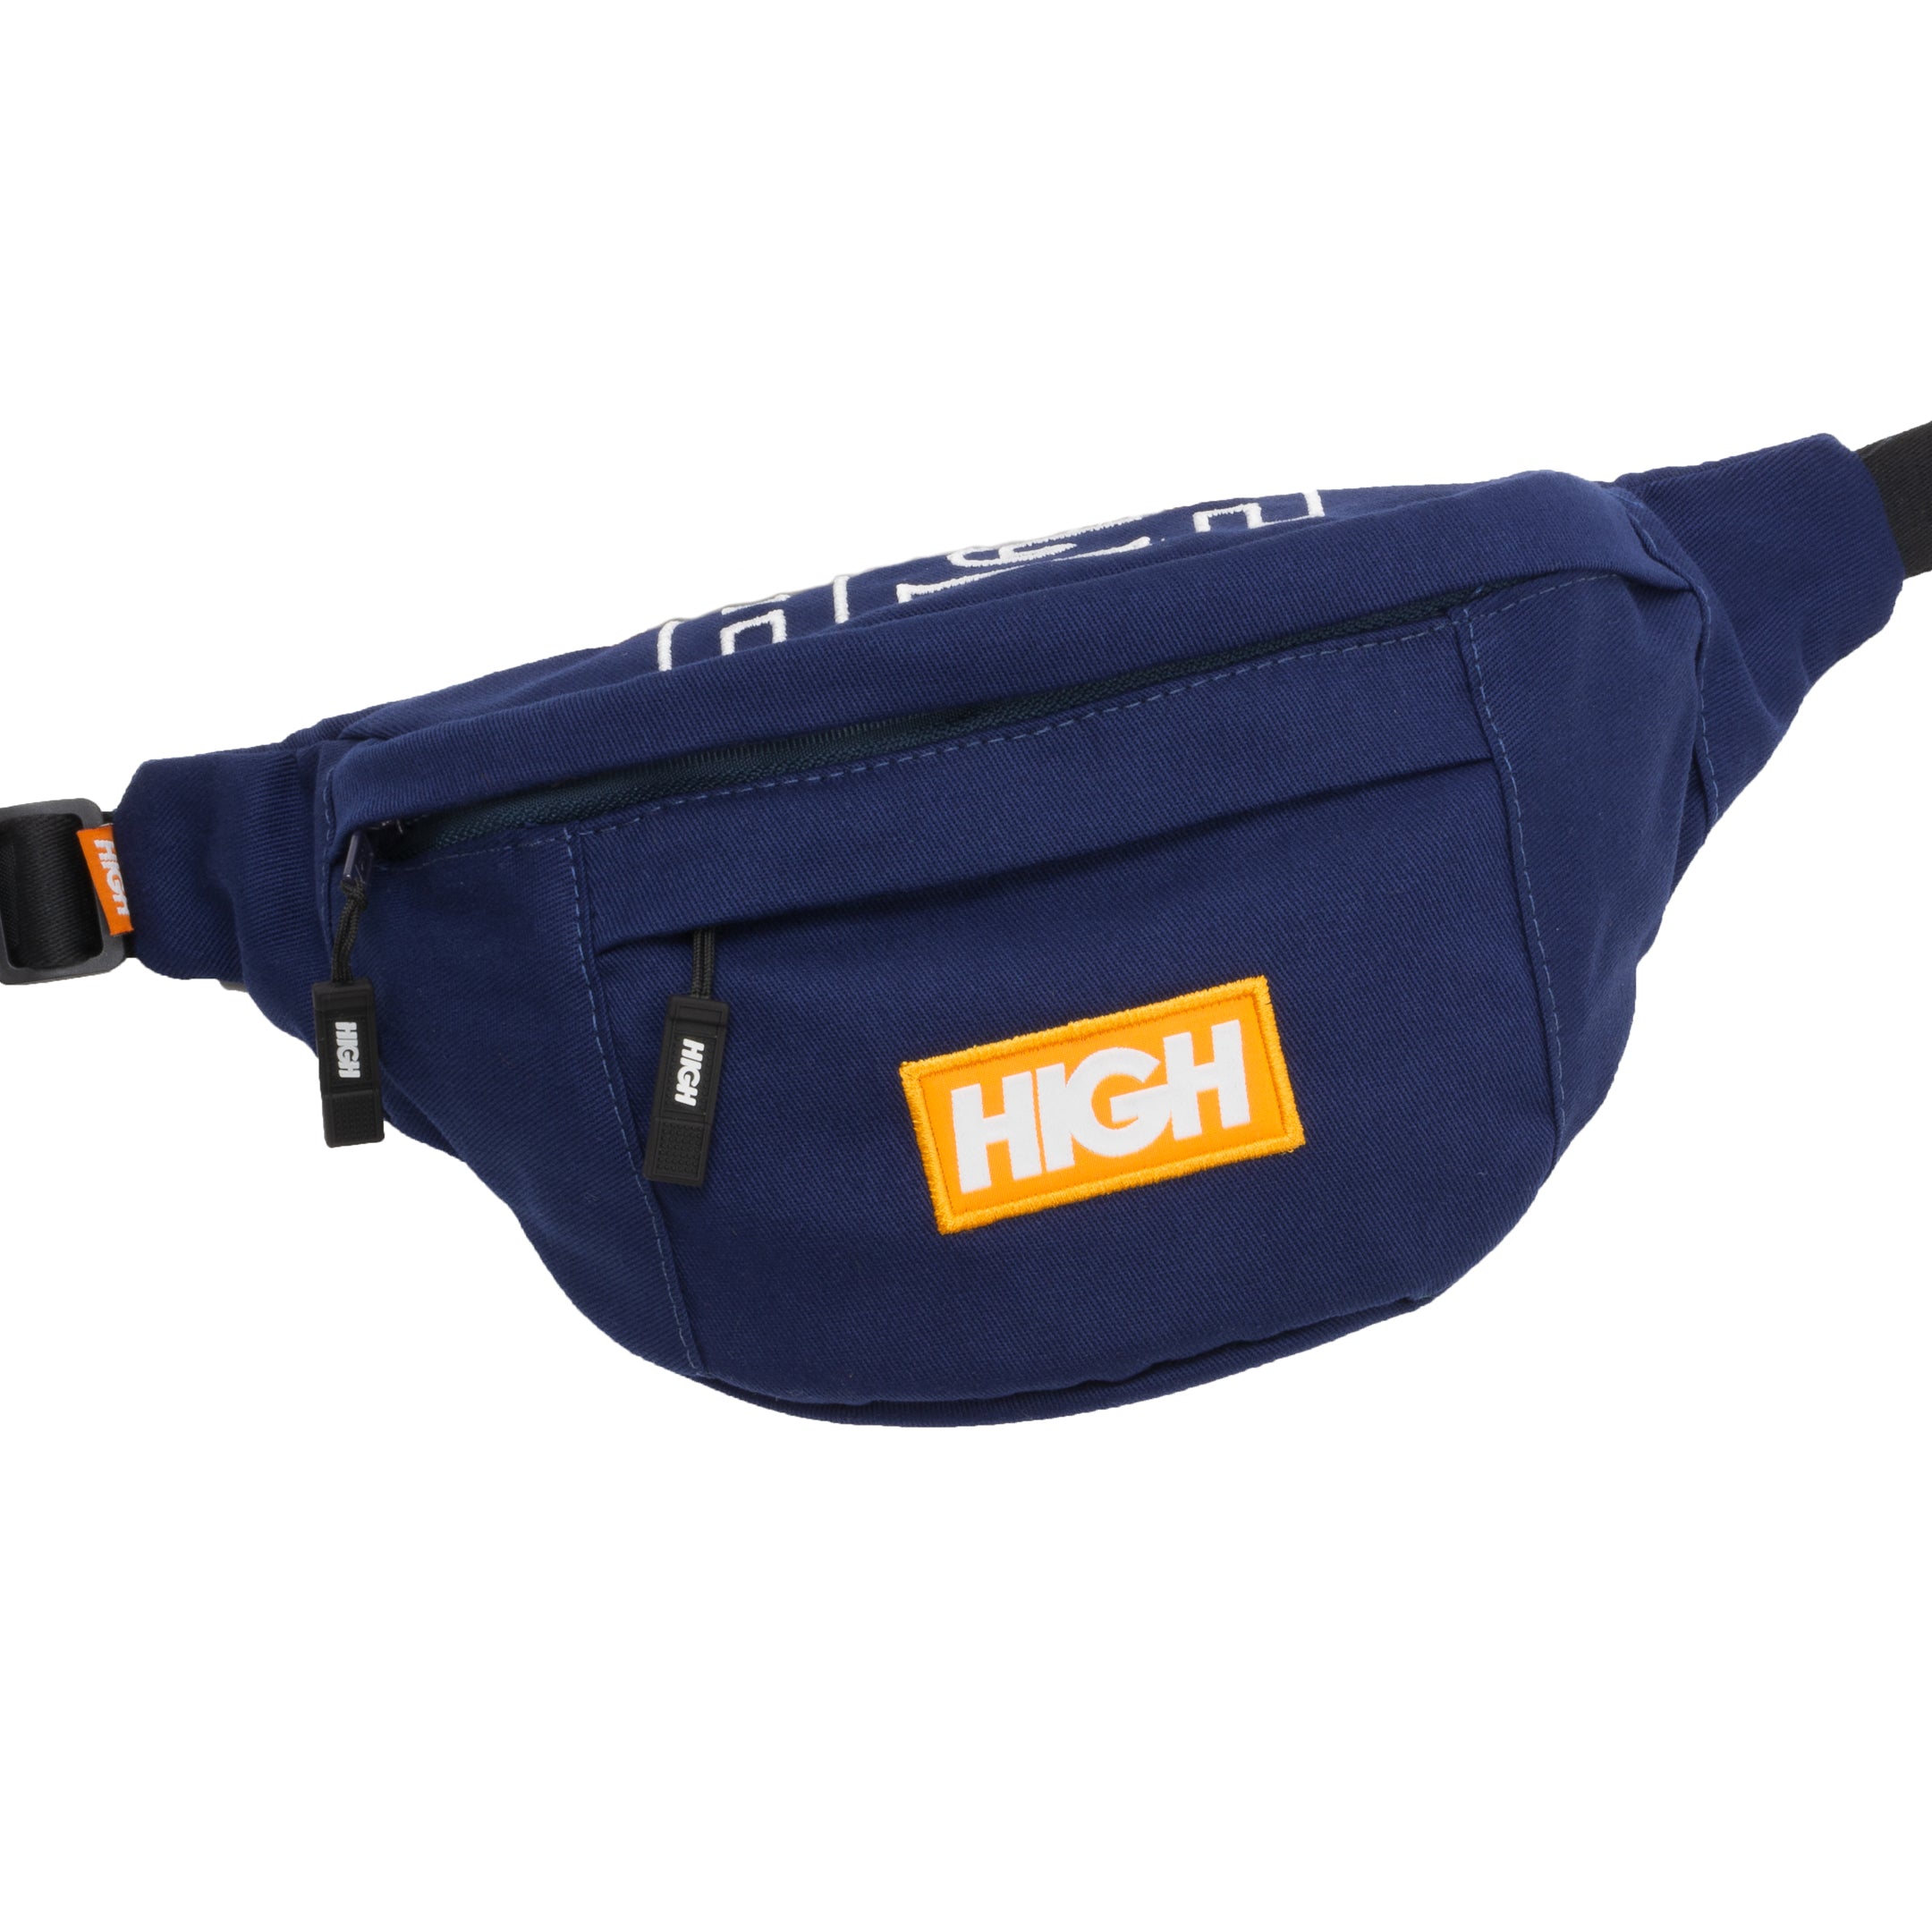 HIGH - Waist Bag Multi Pocket Navy